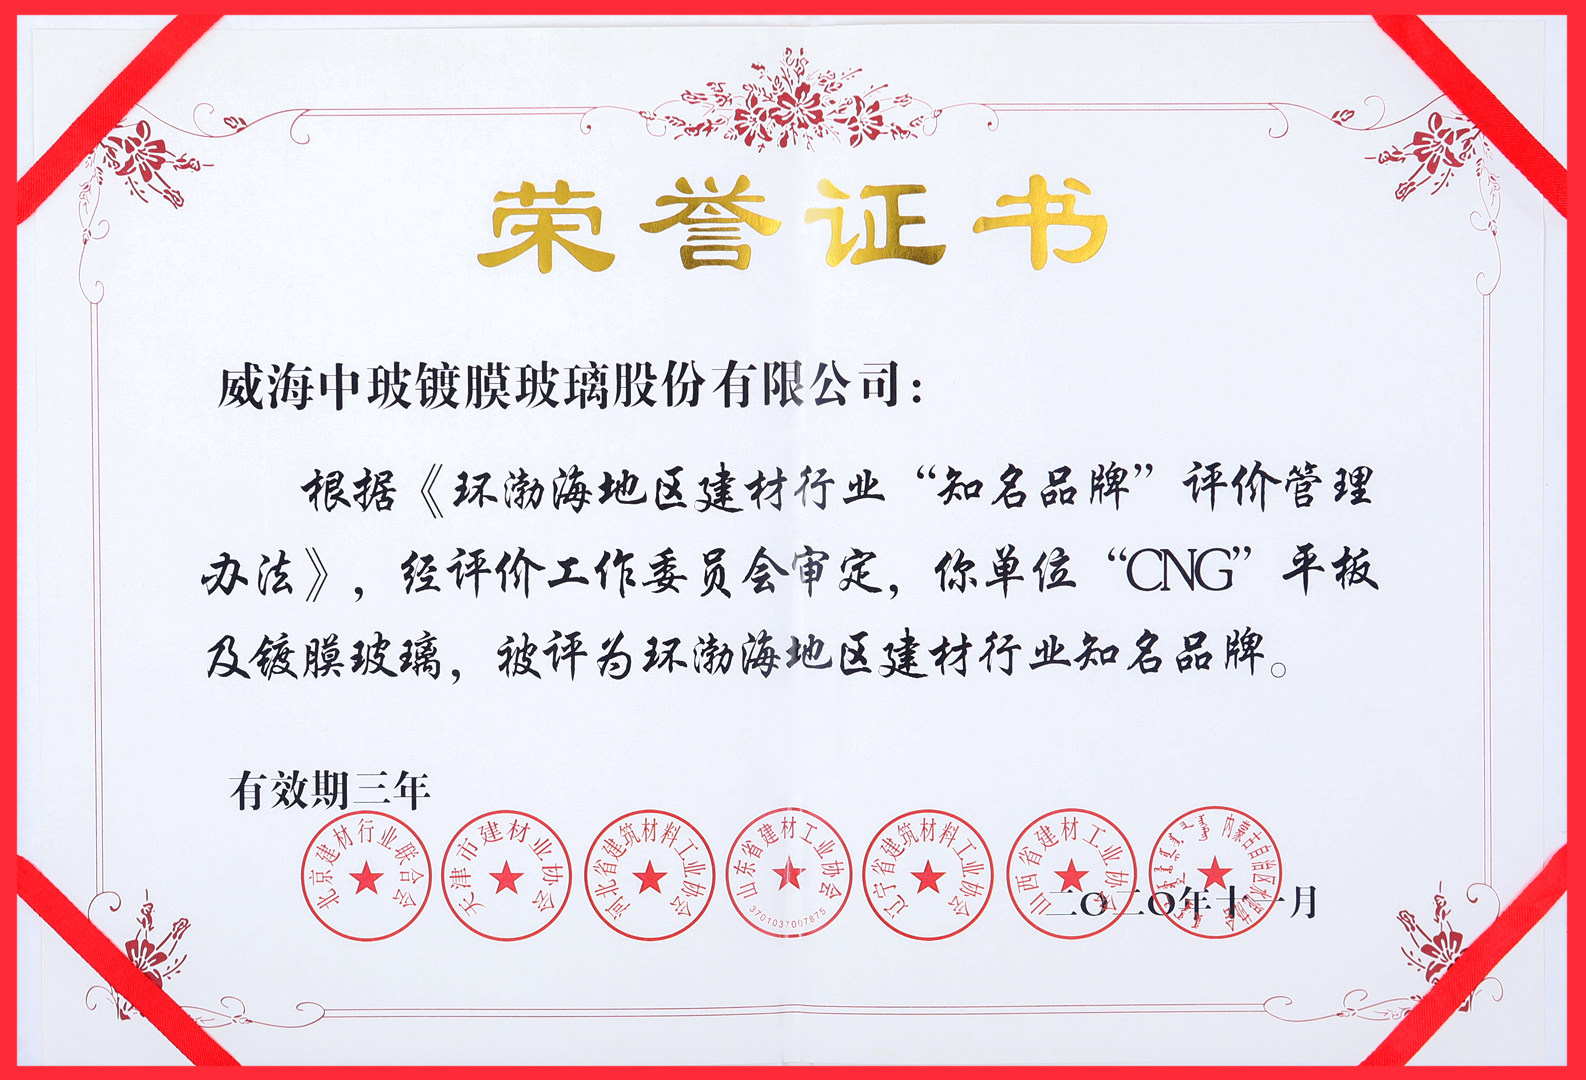 Honorary Certificate of Famous Brand in Bohai Rim in November 2020